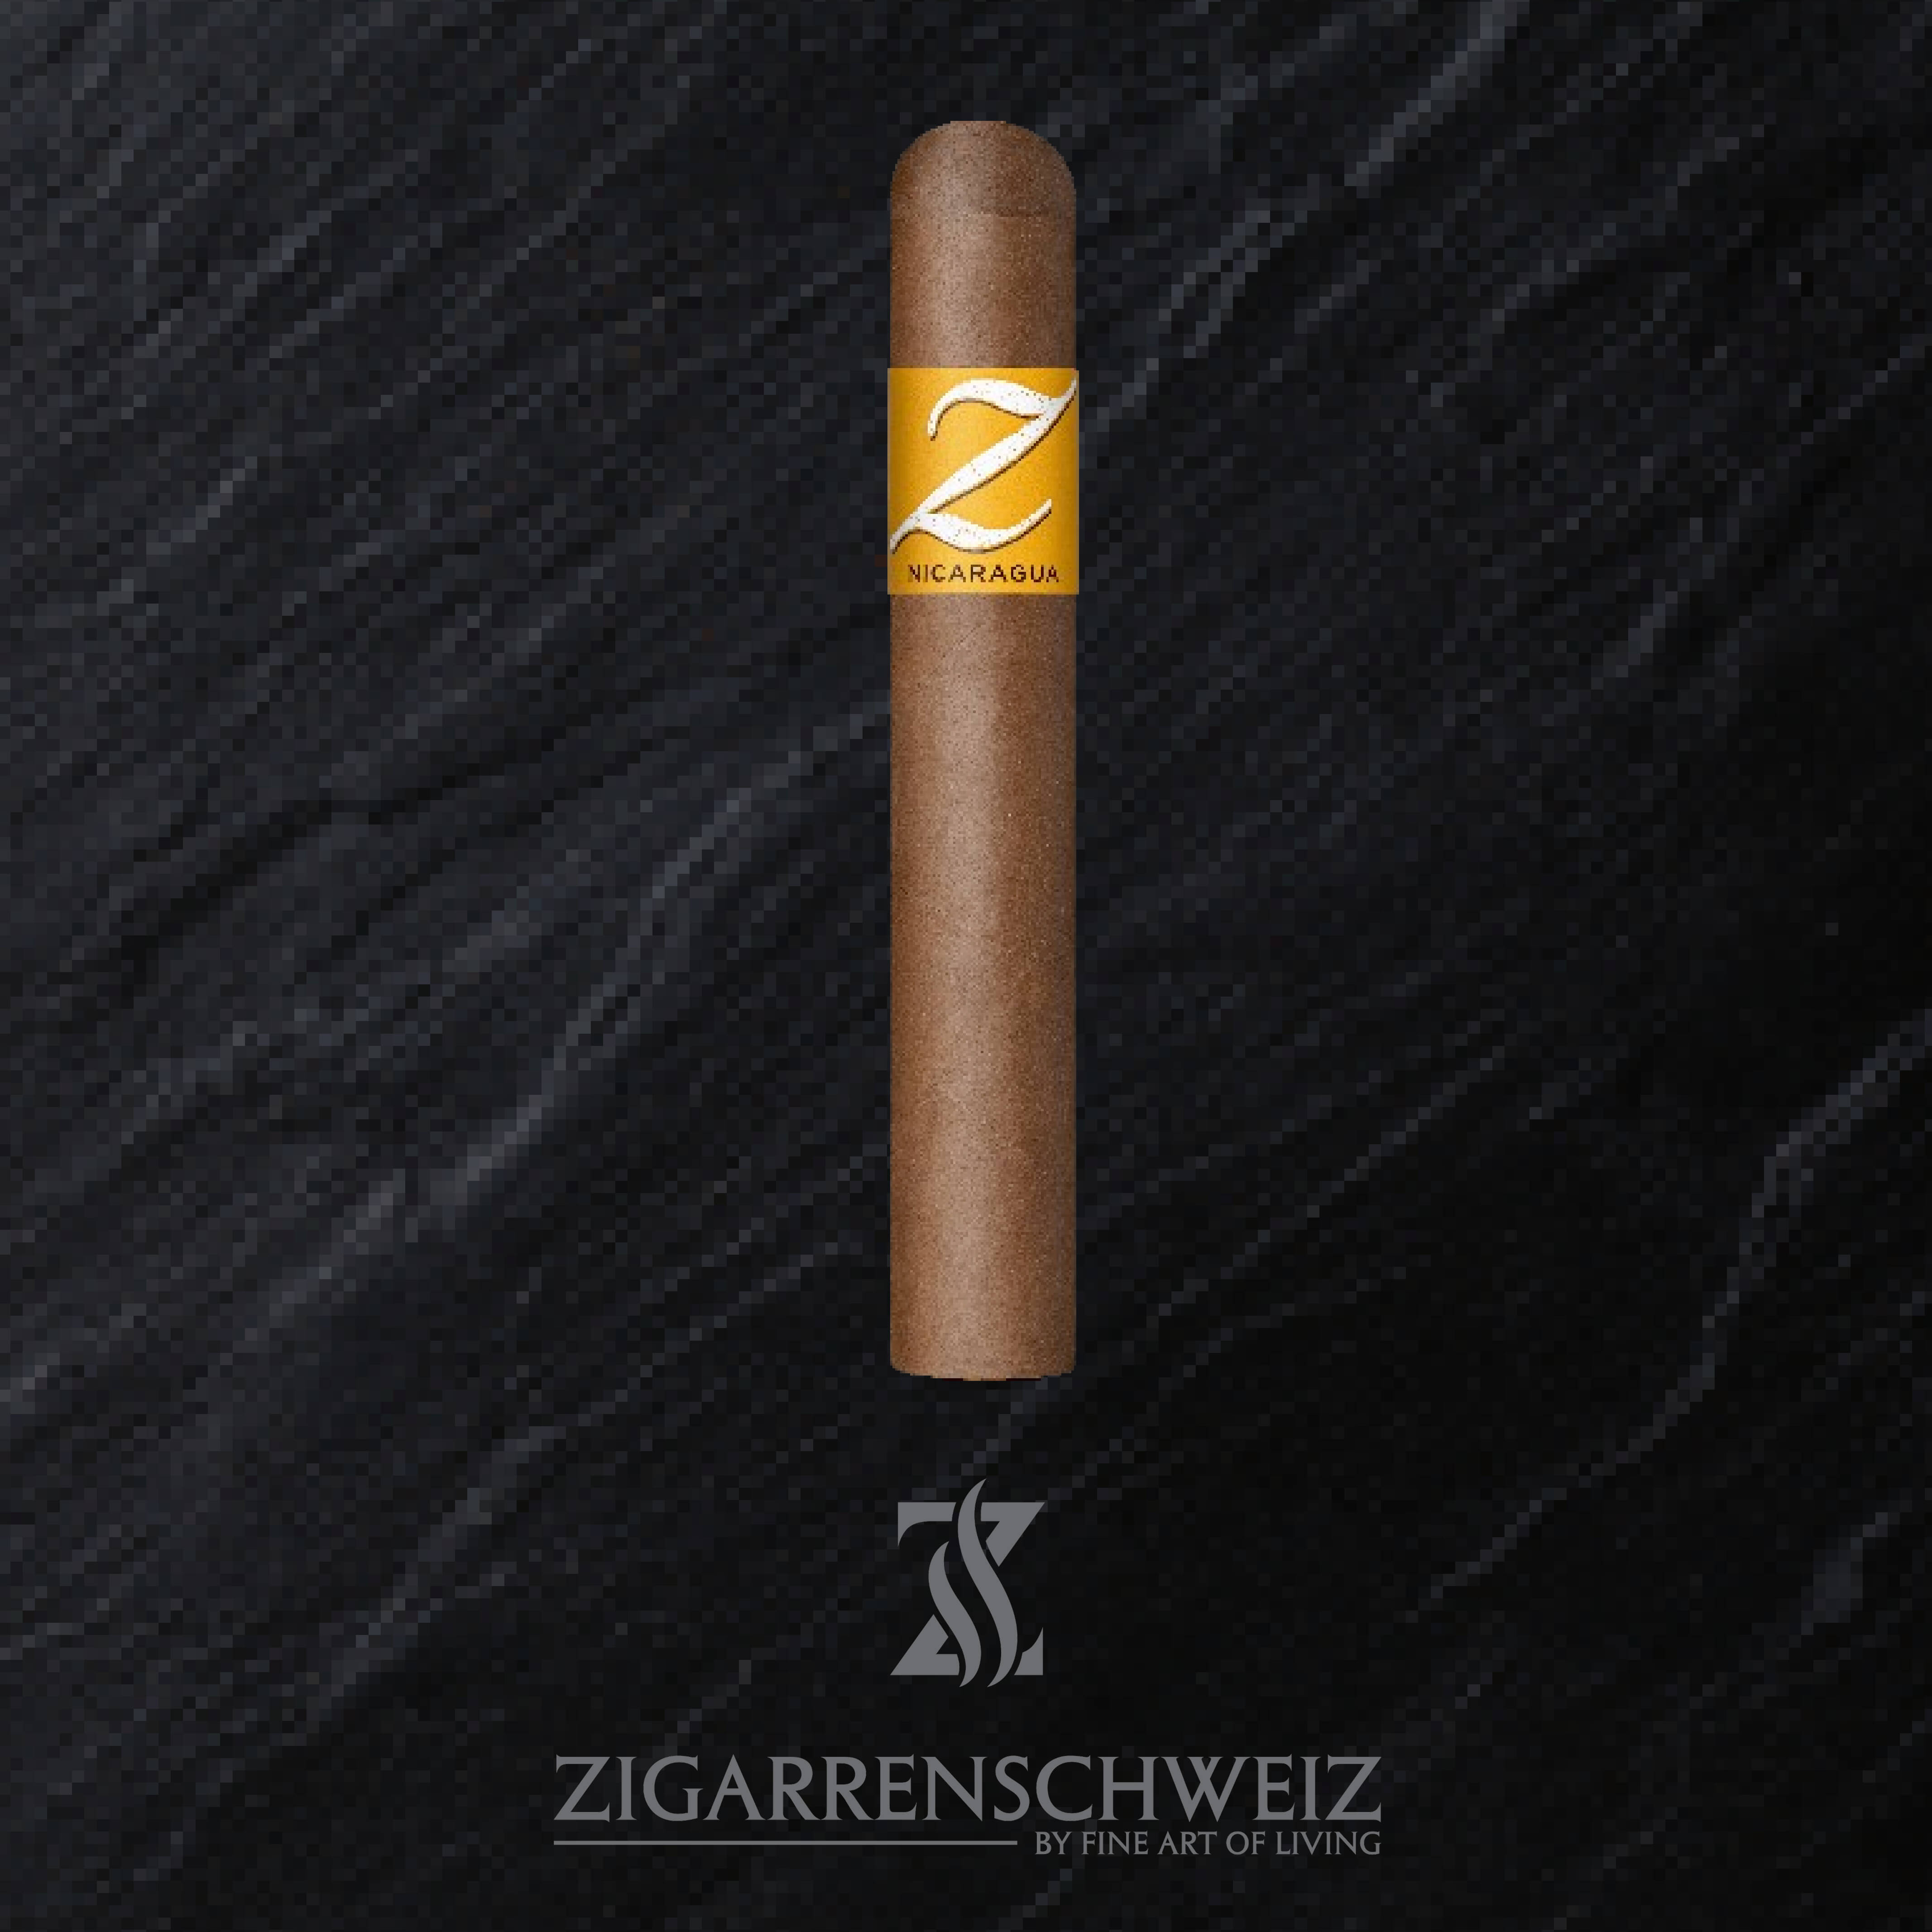 Zino Nicaragua Gordo Zigarre